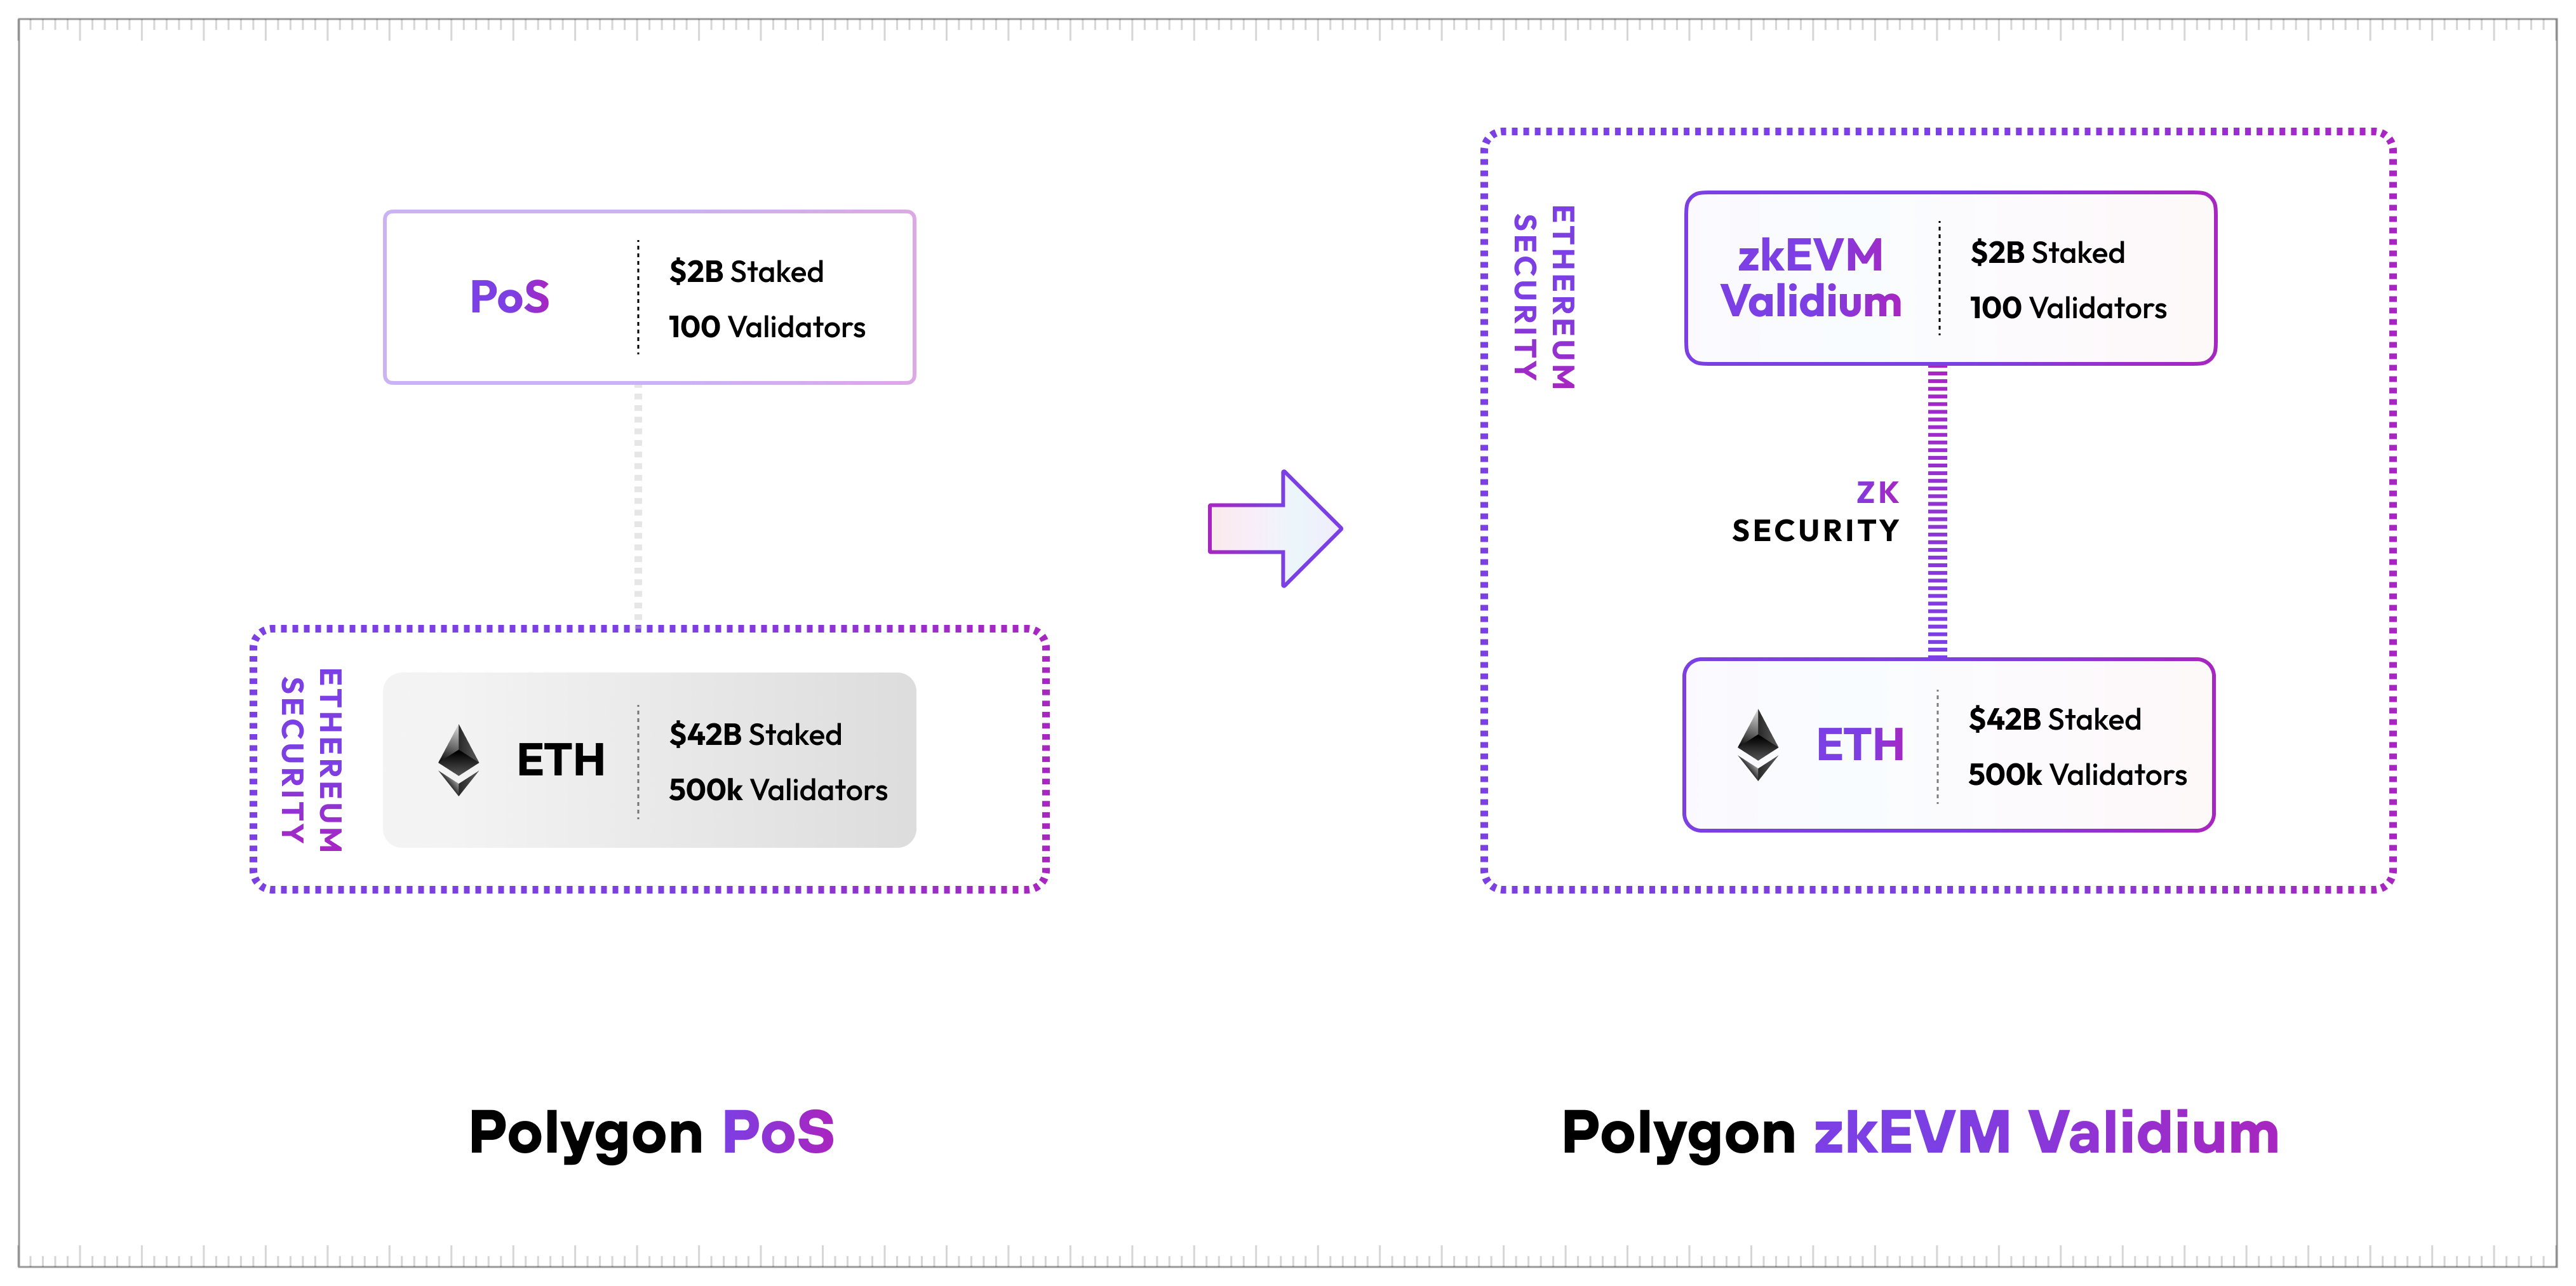 Polygon conversion to Polygon zkEVM Validium